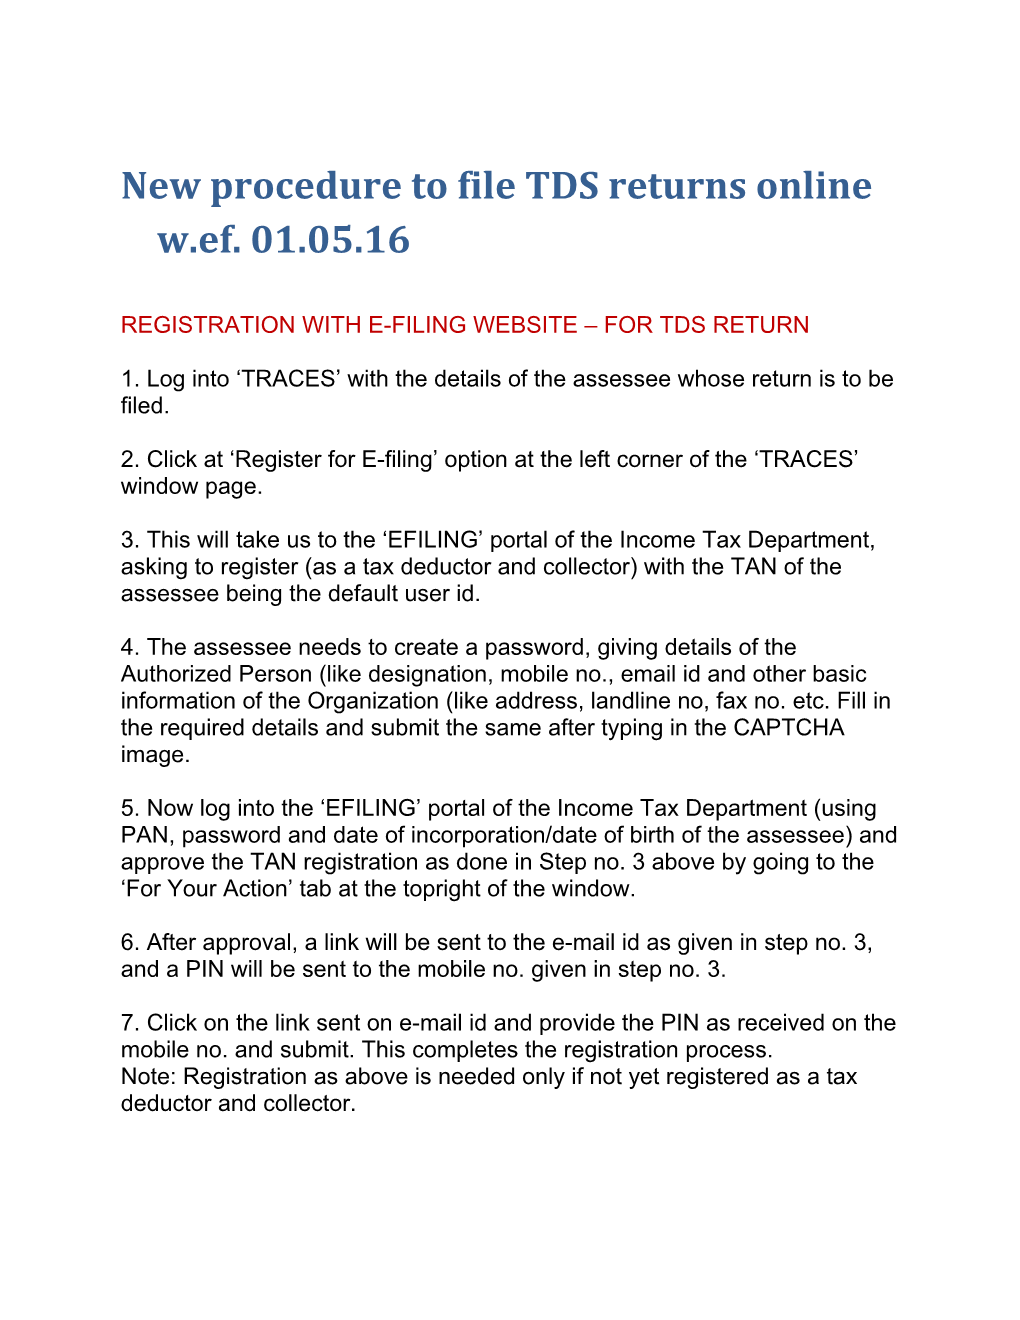 New Procedure to File TDS Returns Online W.Ef. 01.05.16